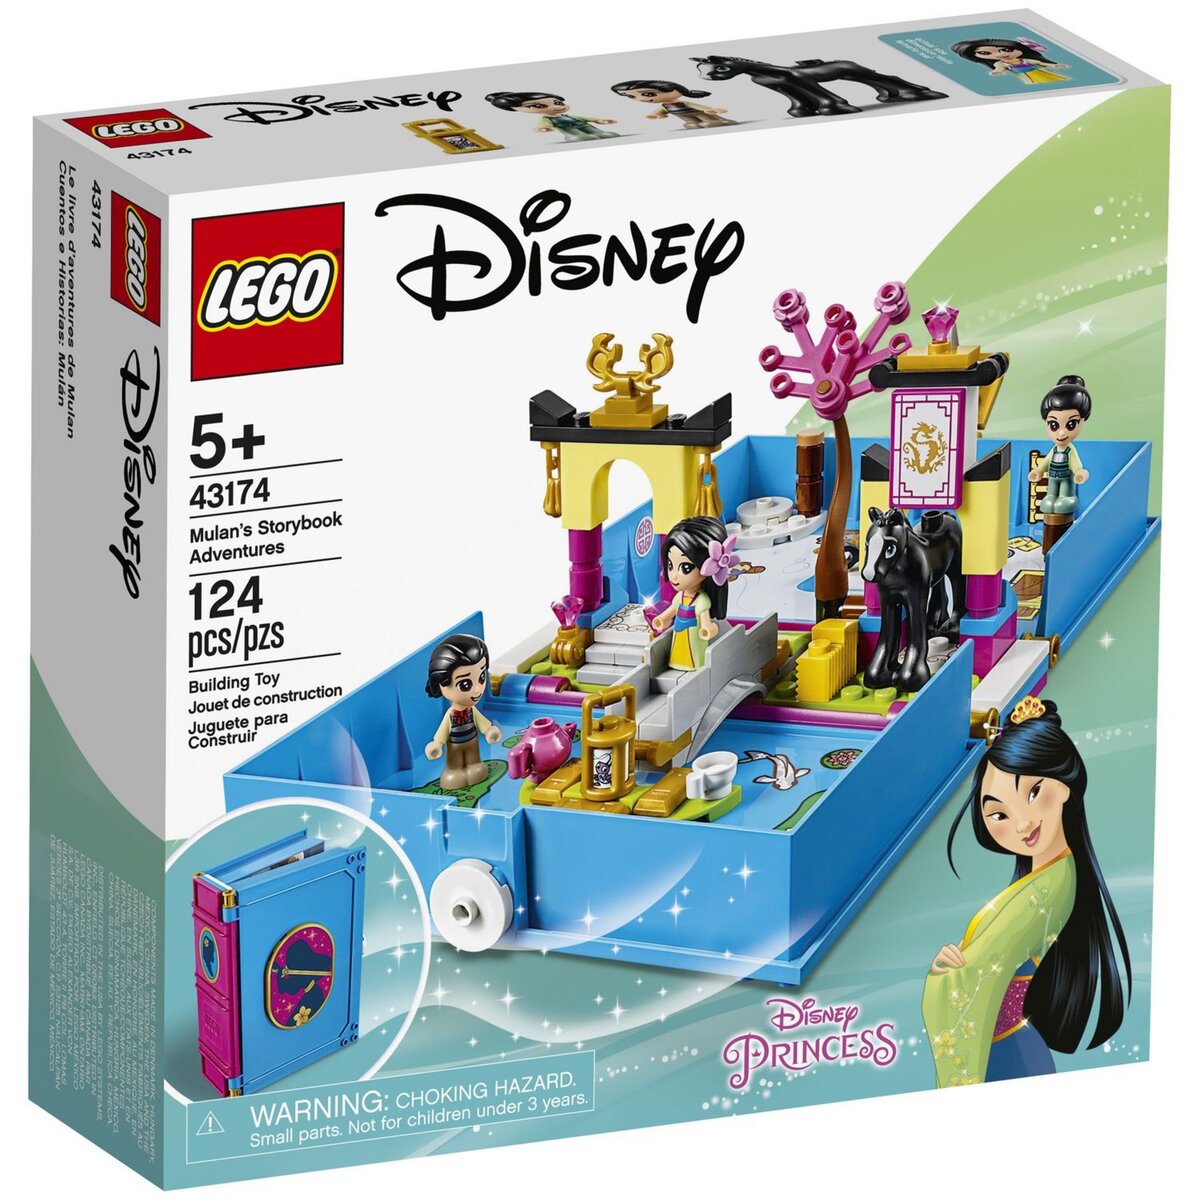 LEGO Princesses Disney 43174-Les Aventures de Mulan dans un Livre de Contes